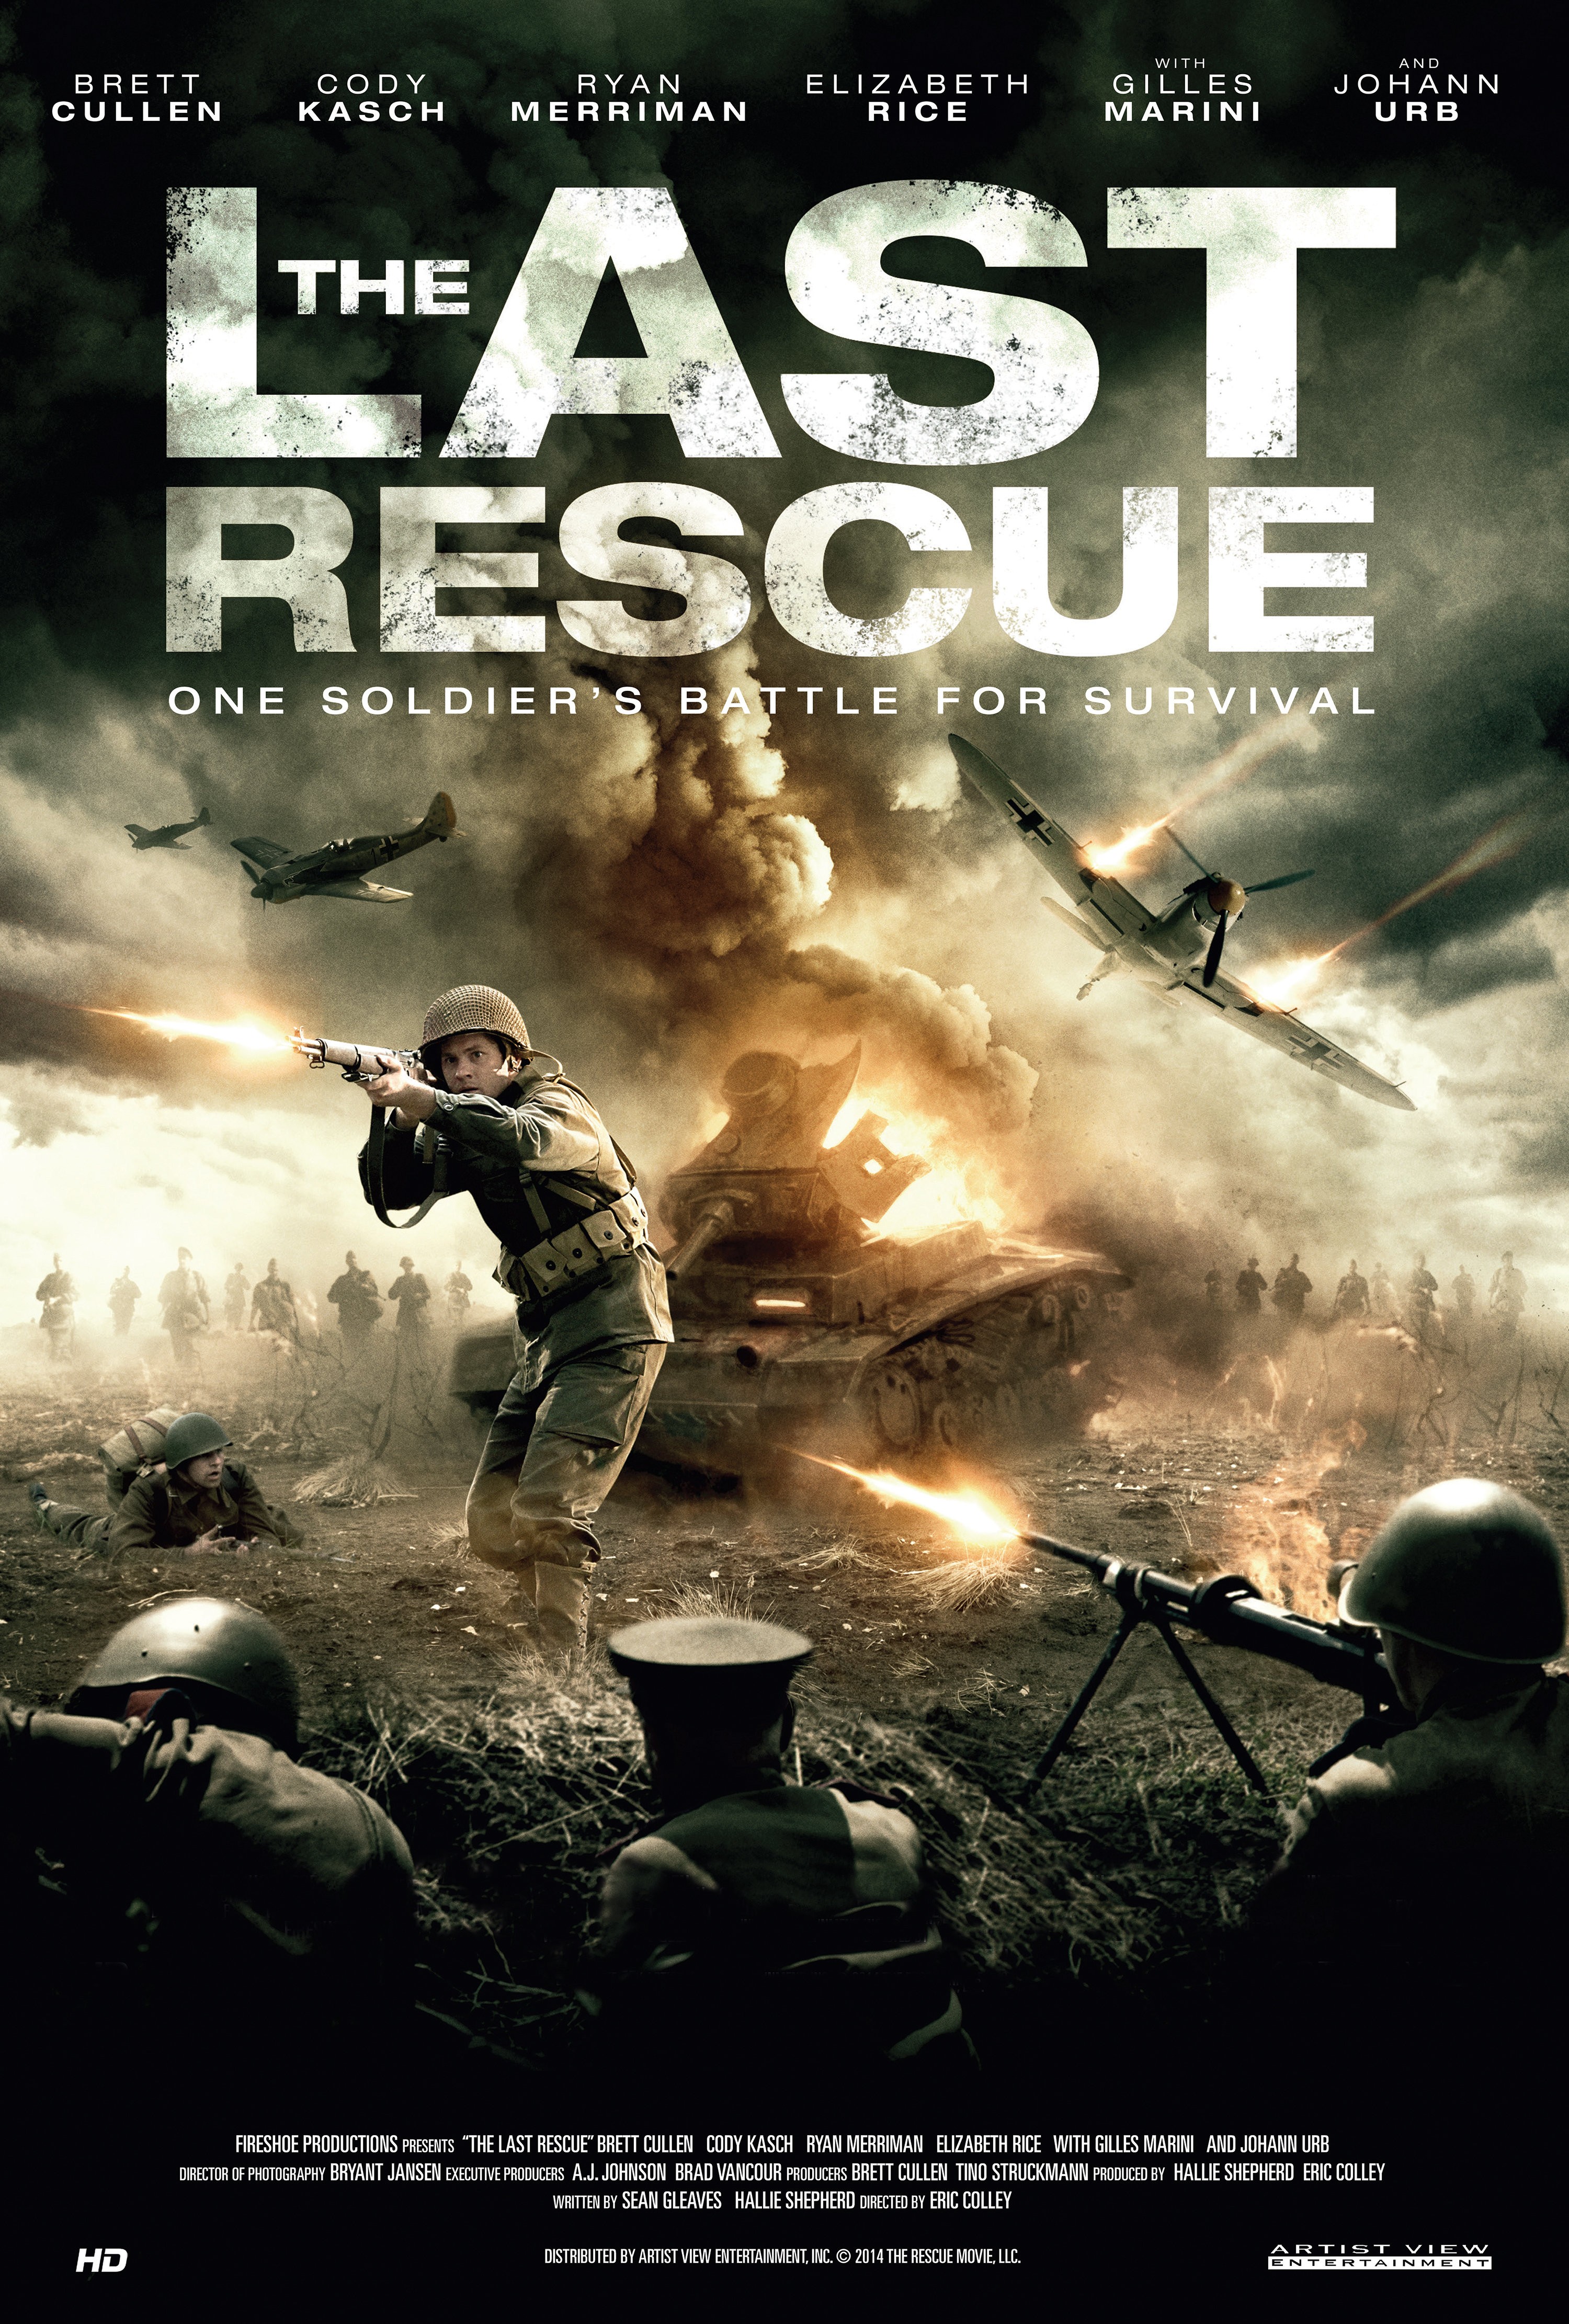 The Last Rescue - Full War Action Drama Movie - WW2